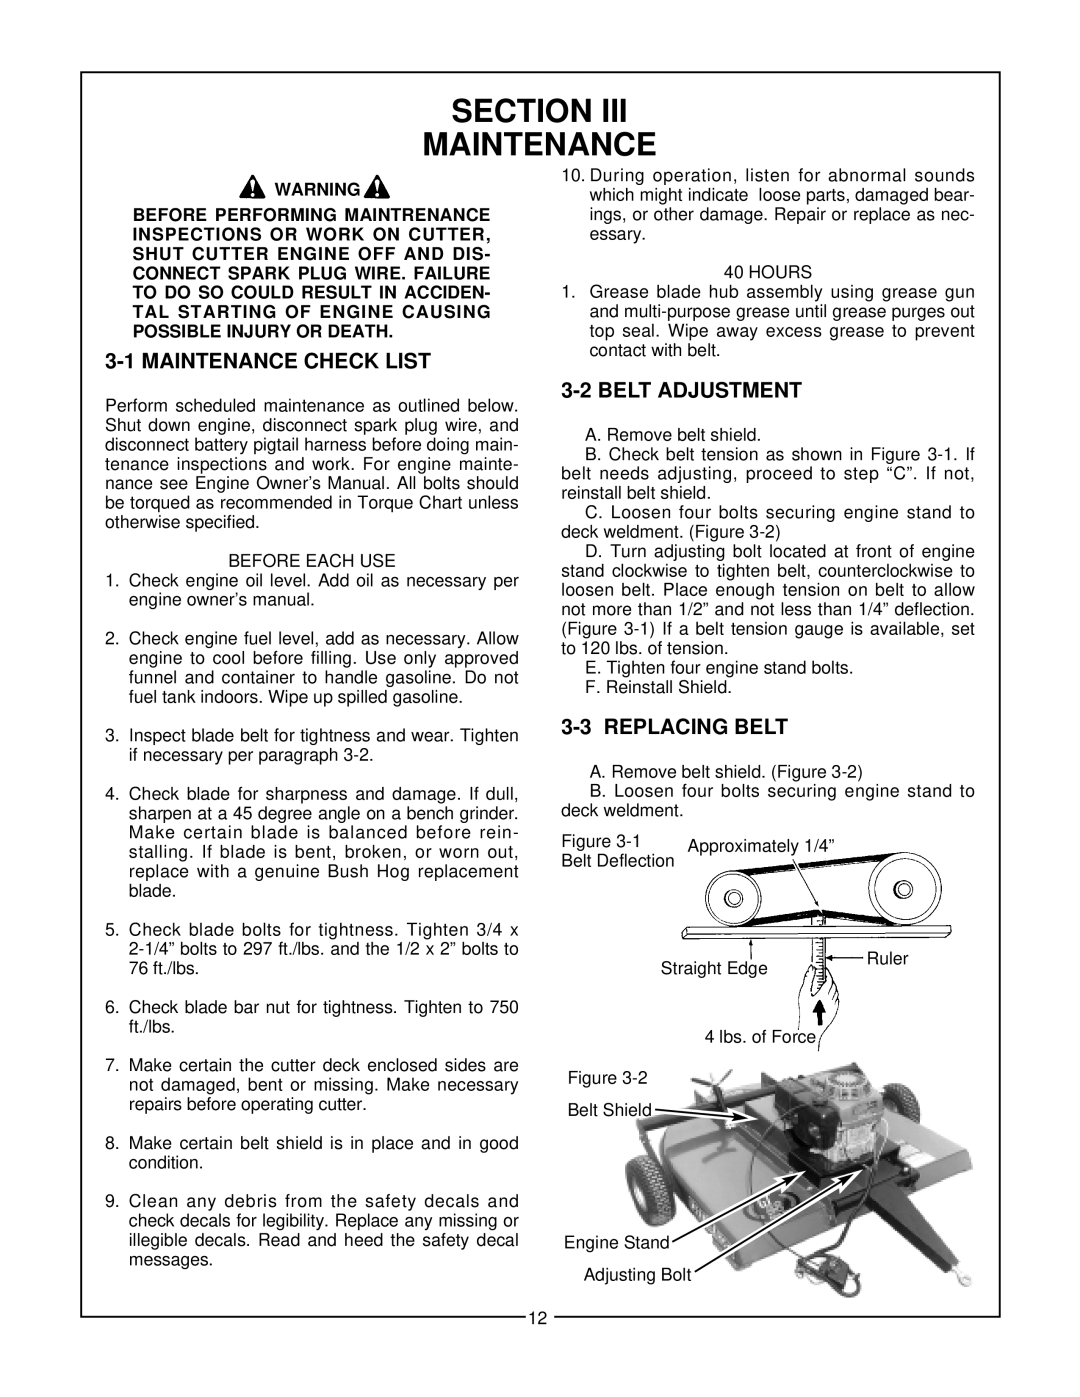 Bush Hog GT 48 manual Section Maintenance, Maintenance Check List, Belt Adjustment, Replacing Belt 